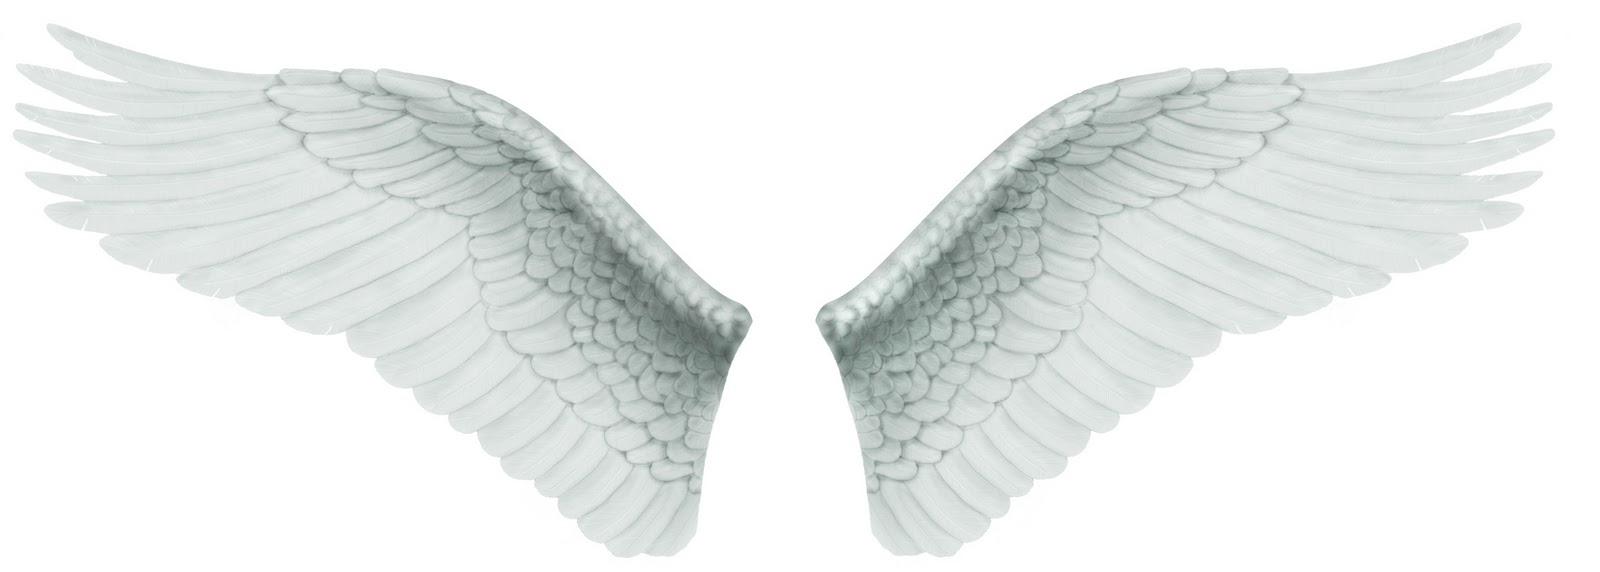 Psd Files Free Download: Angel wings,angel wing tattoos,angel wing ...